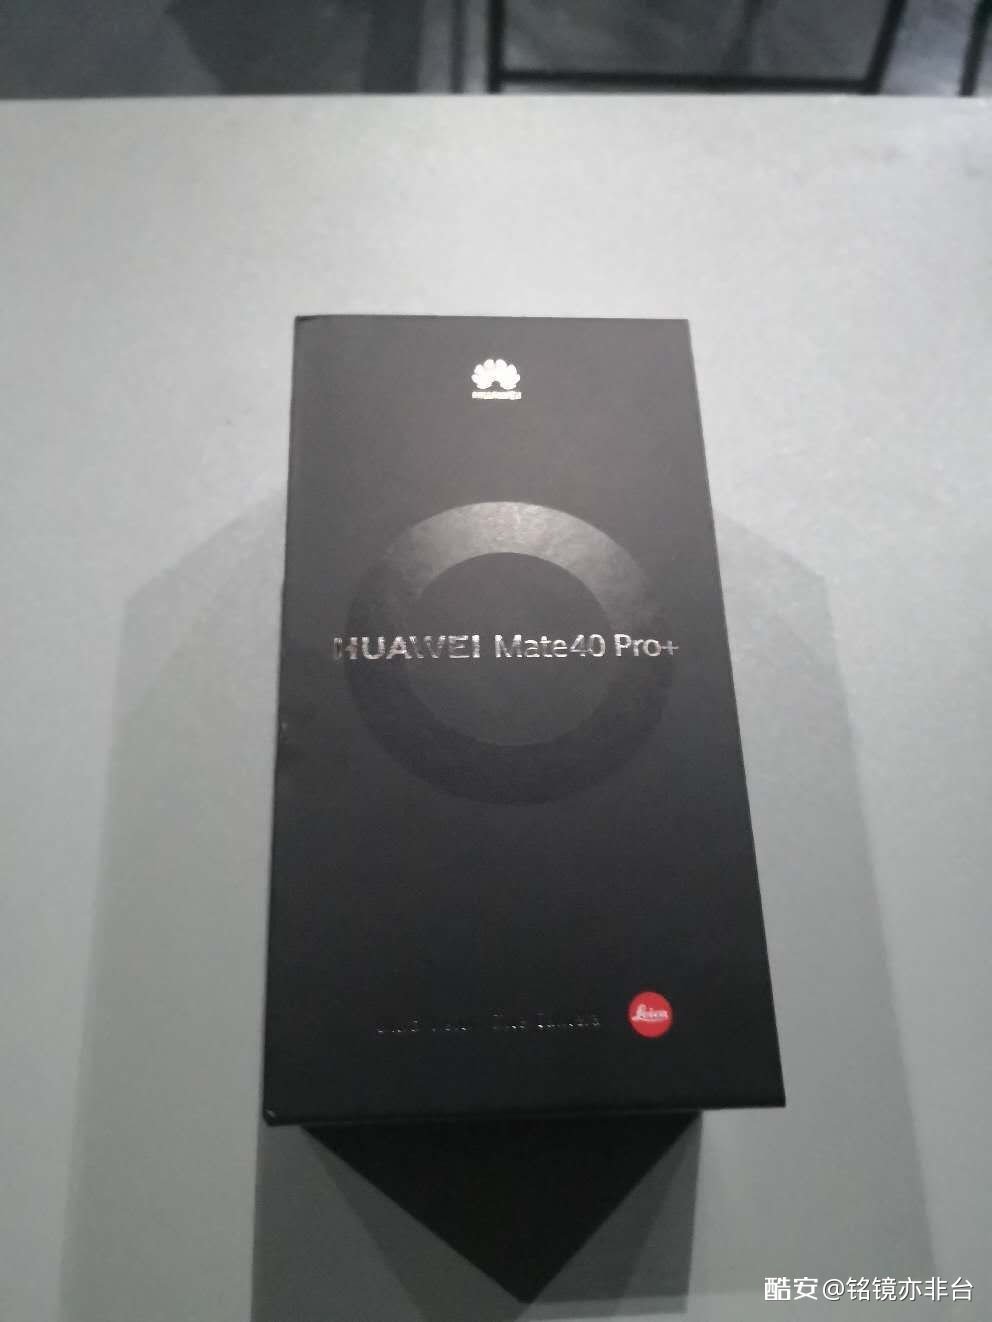 Huawei-Mate-40-Pro-Plus-retail-box-leak-1.jpeg